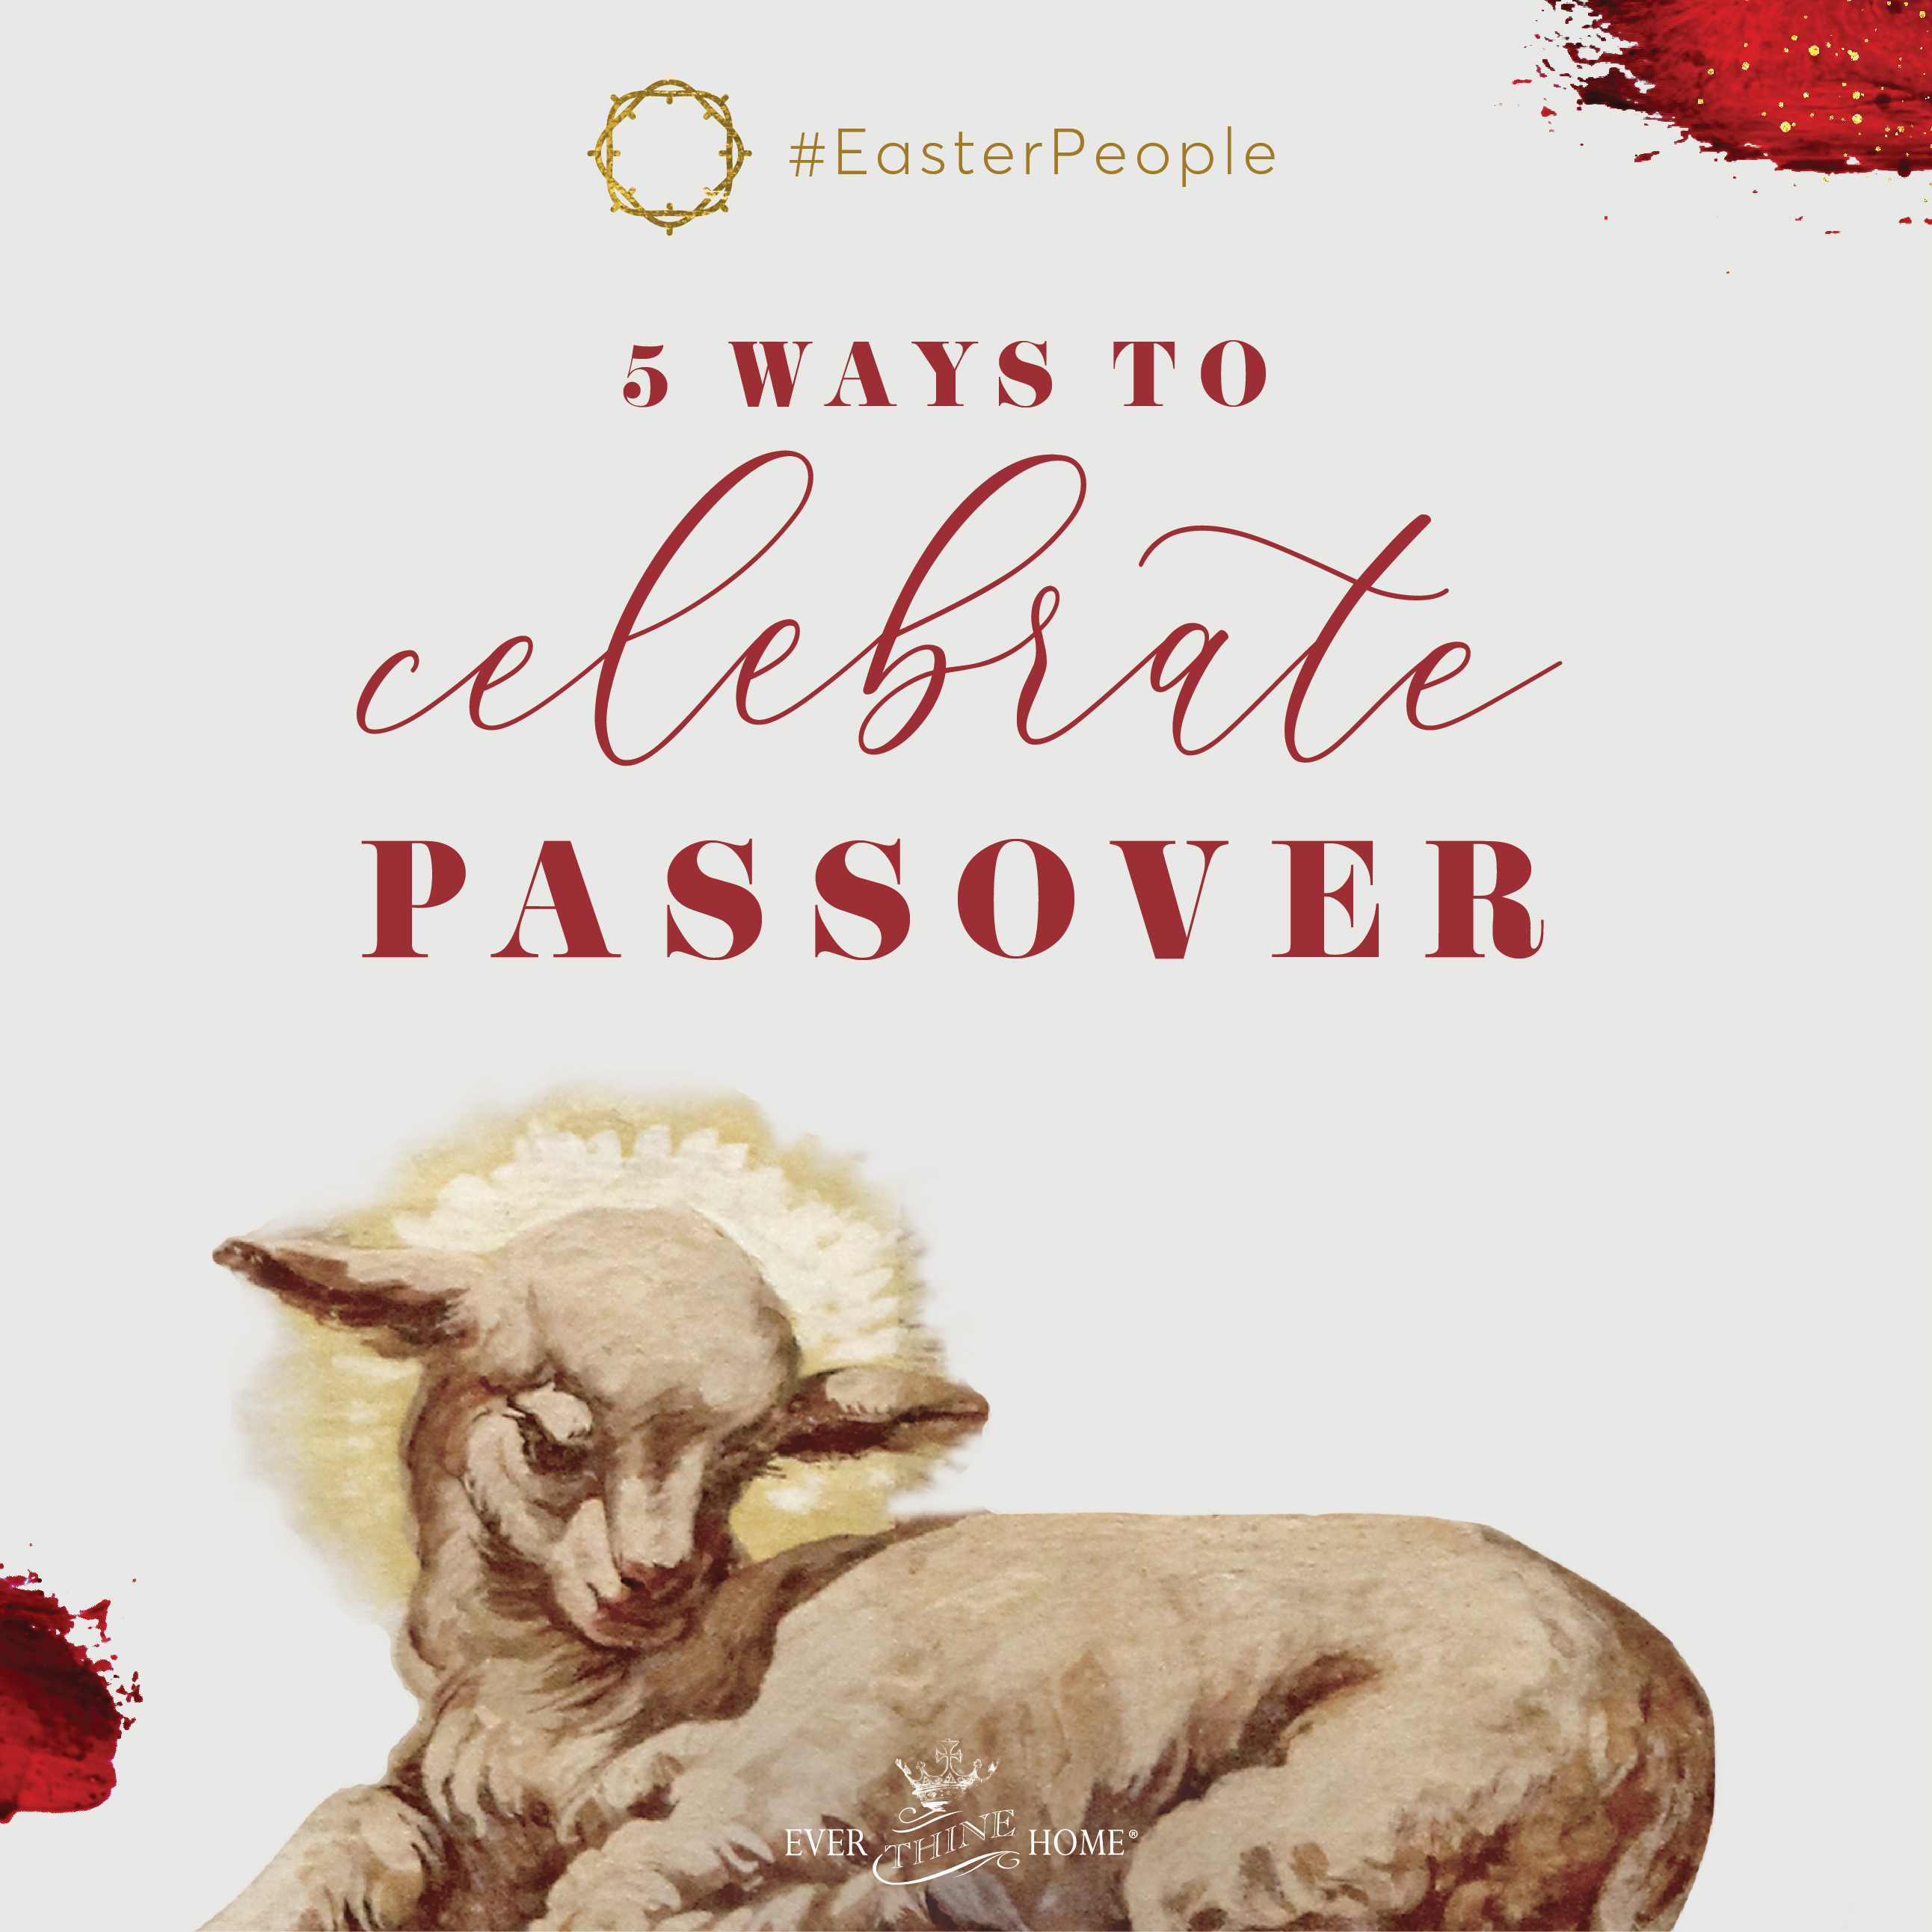 Passover Decor Ideas - Using Freezer Paper Stencils For A ...